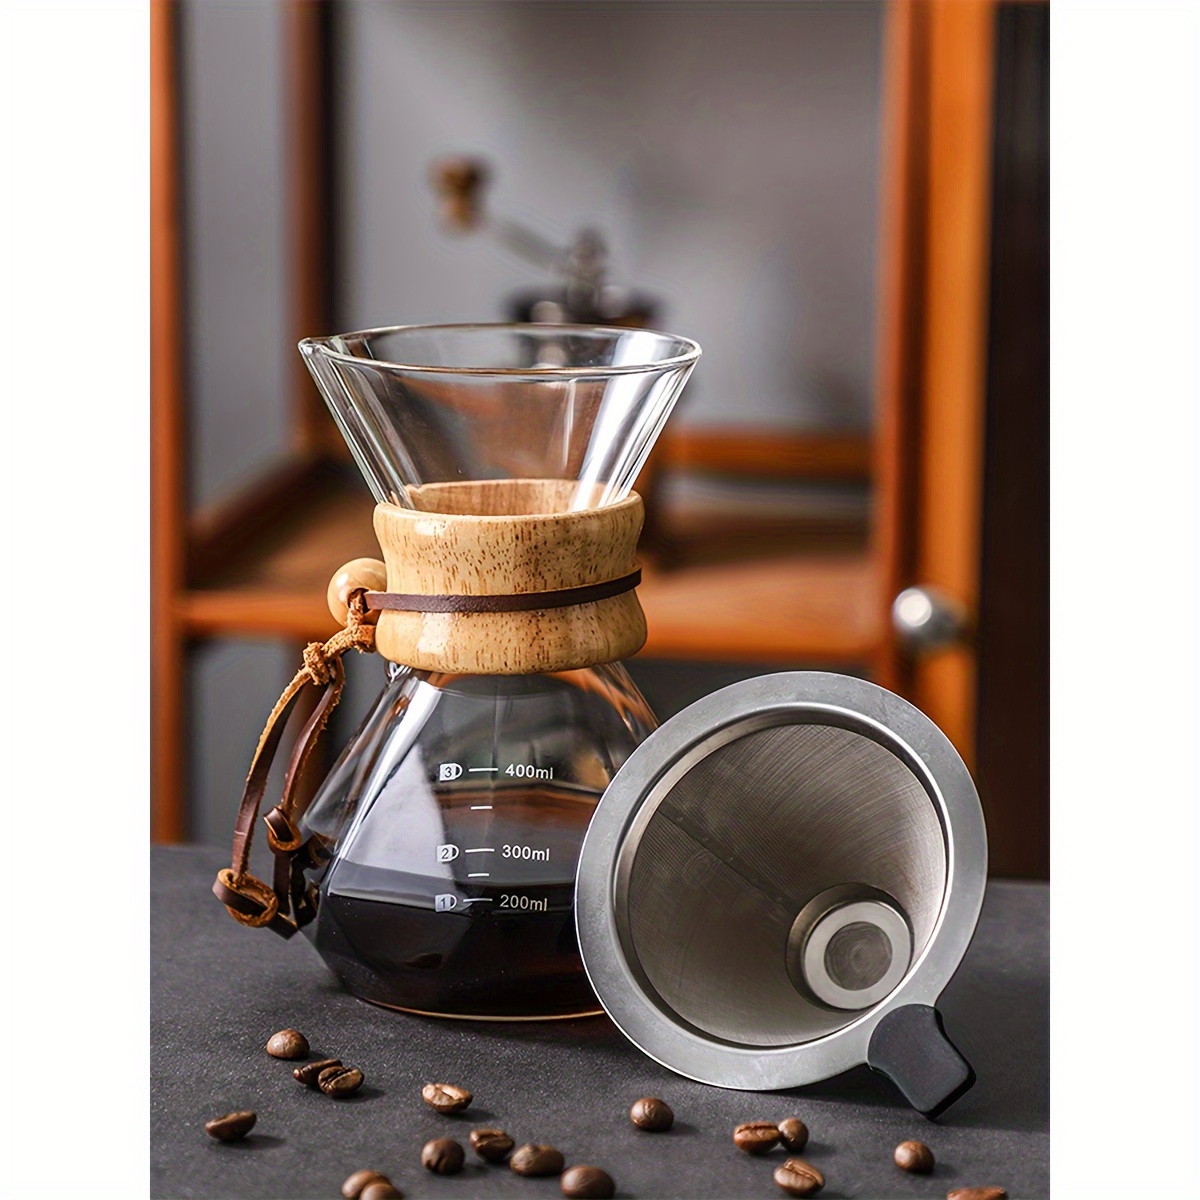 ALDO ™ - dispensador automático de Café en polvo